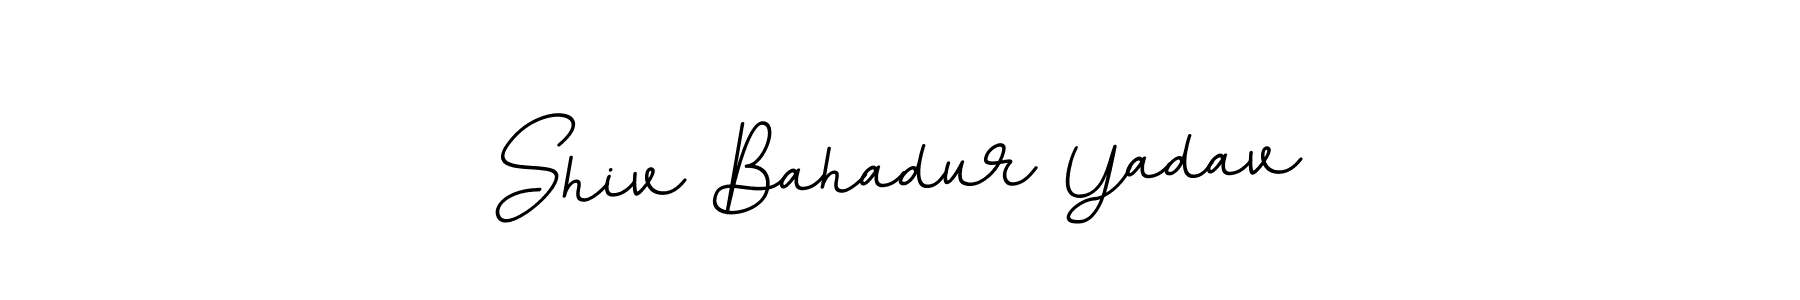 How to Draw Shiv Bahadur Yadav signature style? BallpointsItalic-DORy9 is a latest design signature styles for name Shiv Bahadur Yadav. Shiv Bahadur Yadav signature style 11 images and pictures png